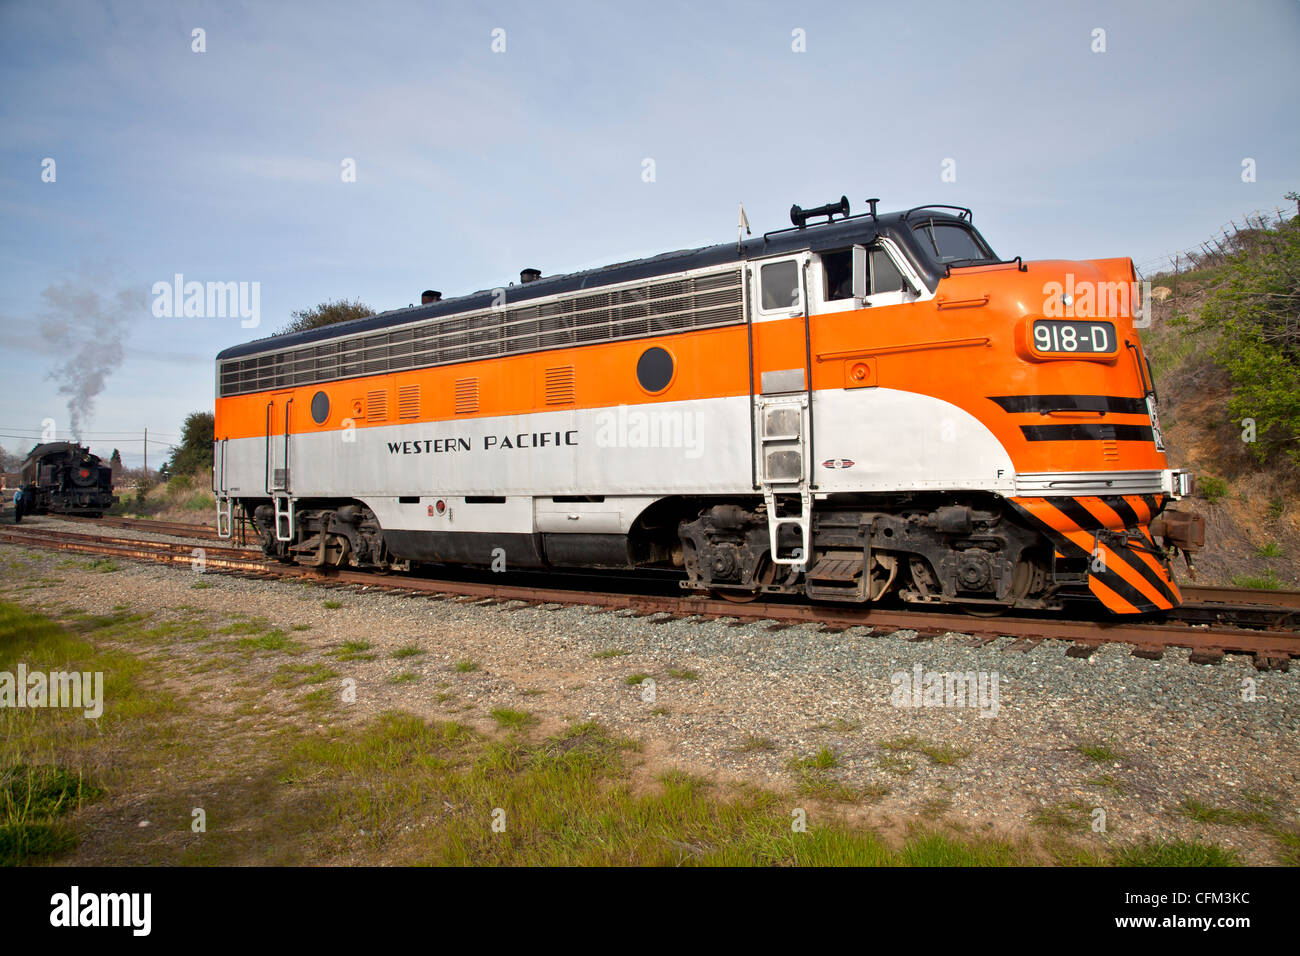 Western Pacific locomotive 918D at Vallejo Mills near Niles, California. Stock Photo